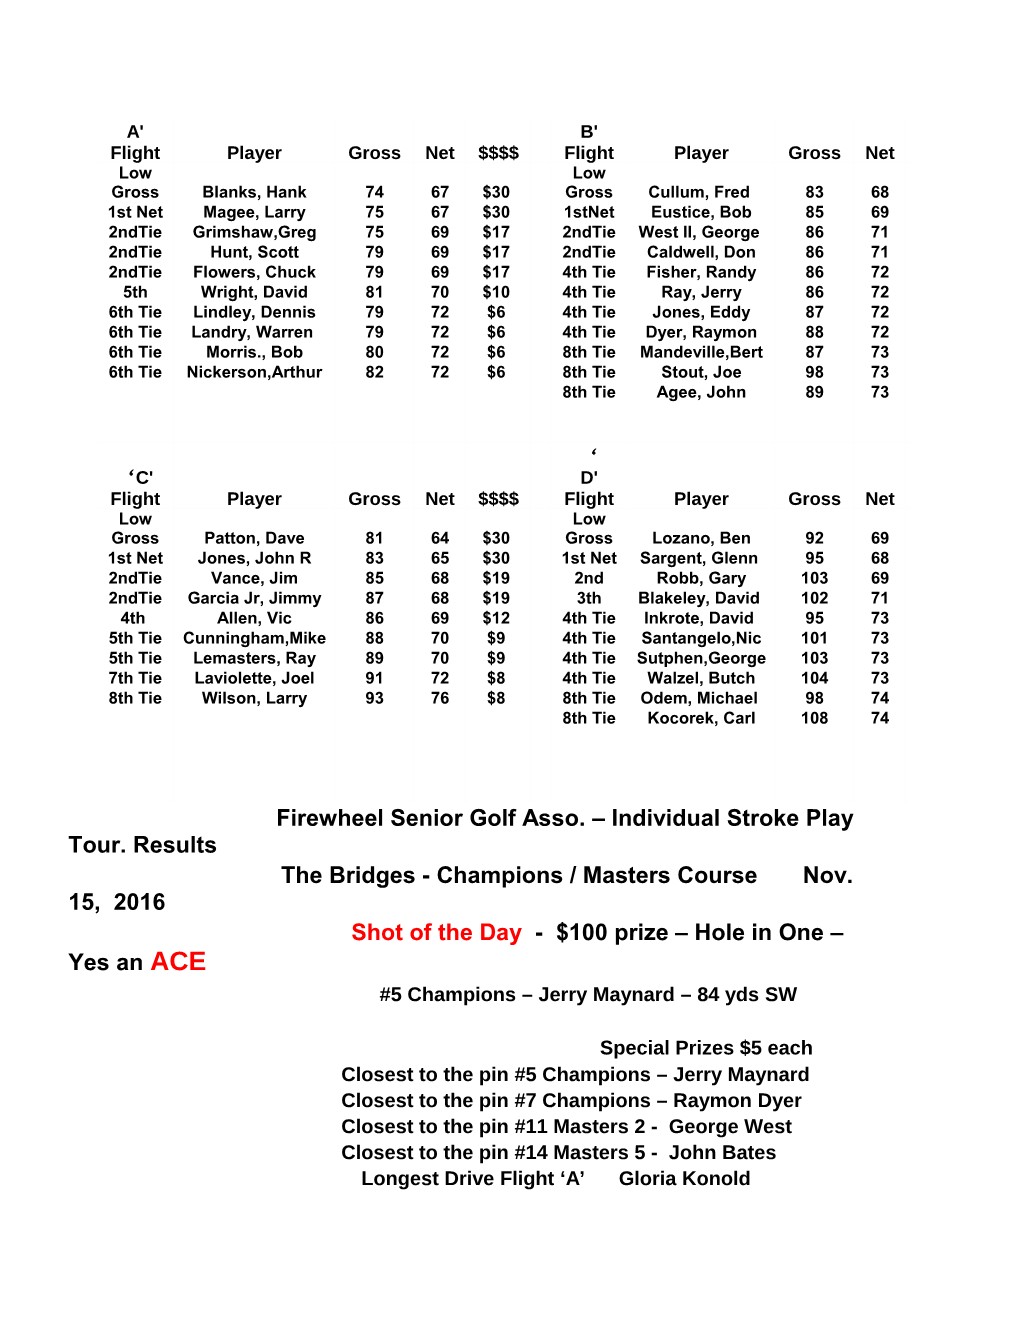 Firewheel Senior Golf Asso. Individual Stroke Play Tour. Results